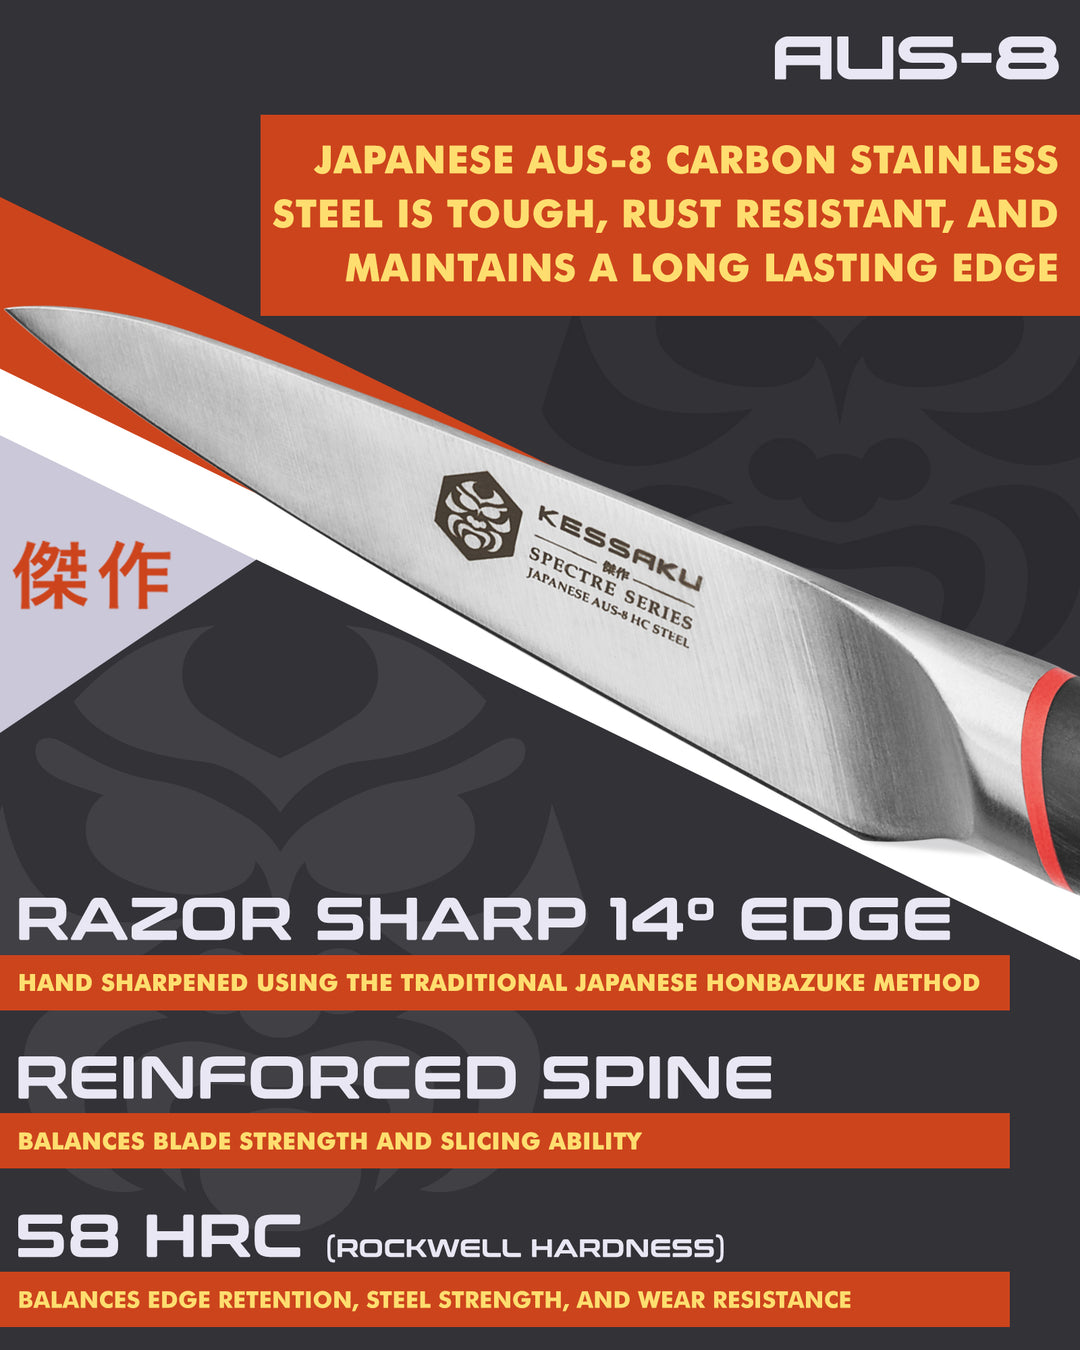 Kessaku Spectre Paring Knife blade features: AUS-8 steel, 58 HRC, 14 degree edge, reinforced spine